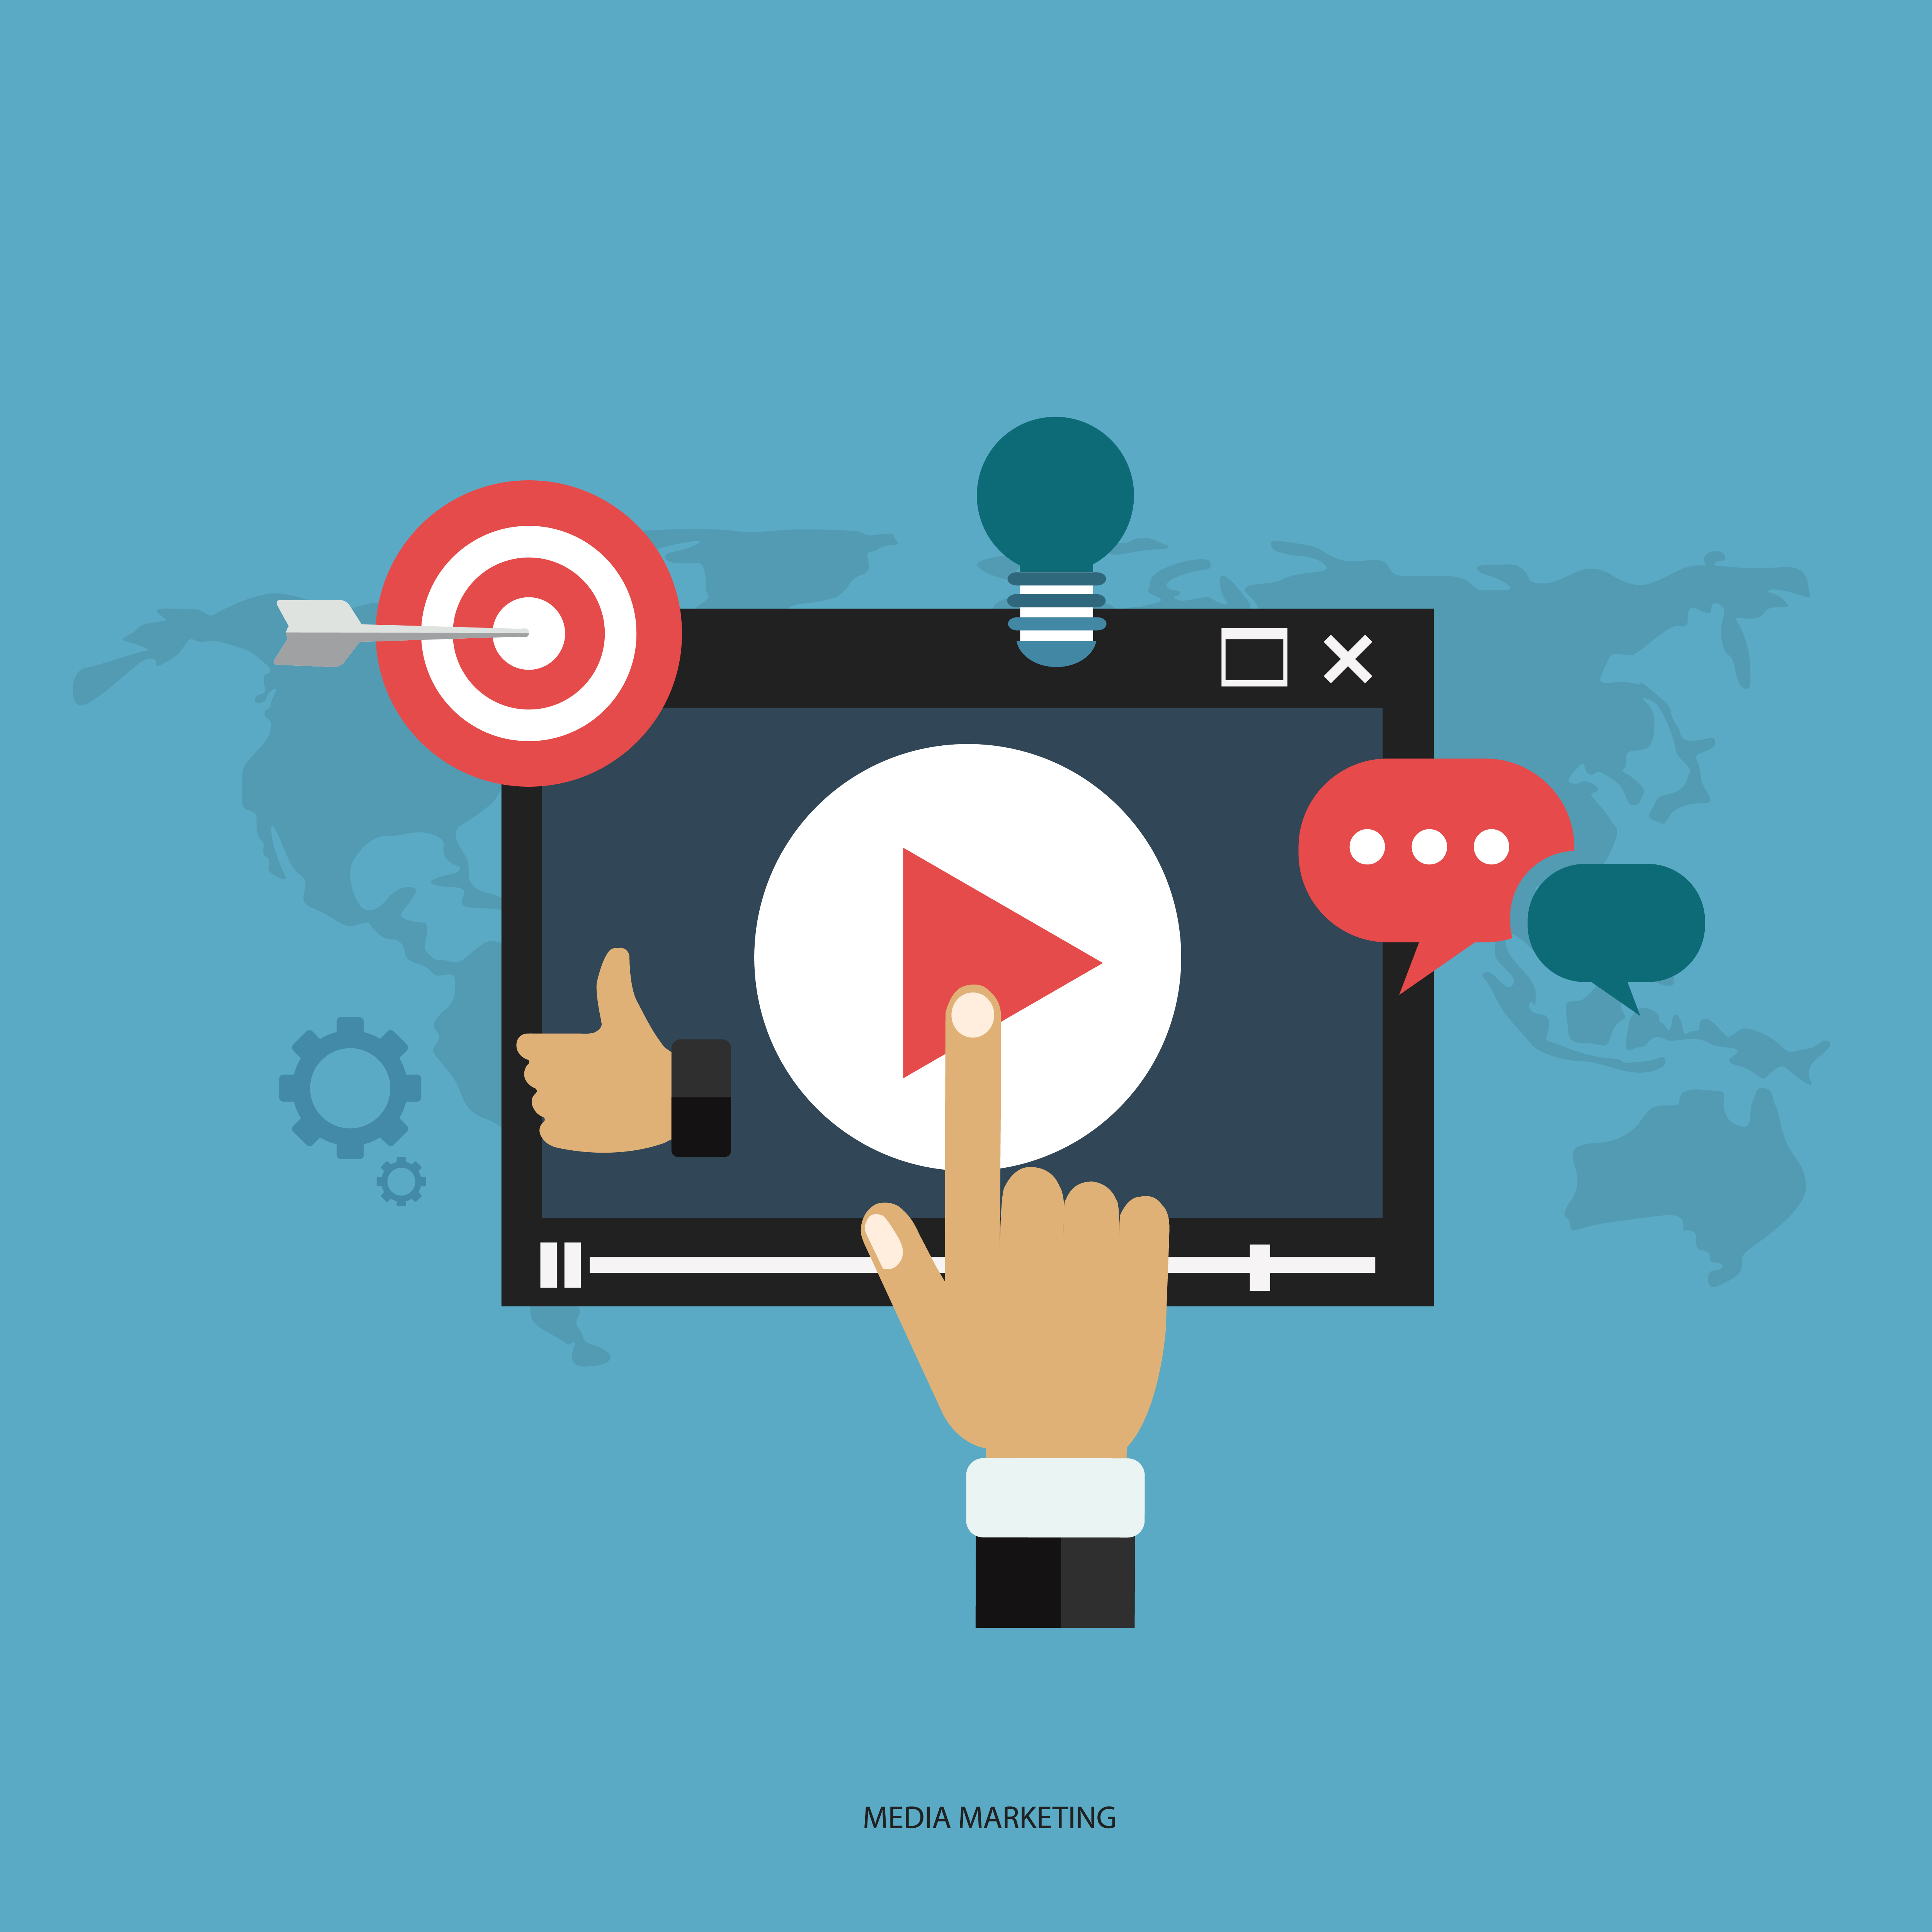 Google video ads training - Skill Training Nepal